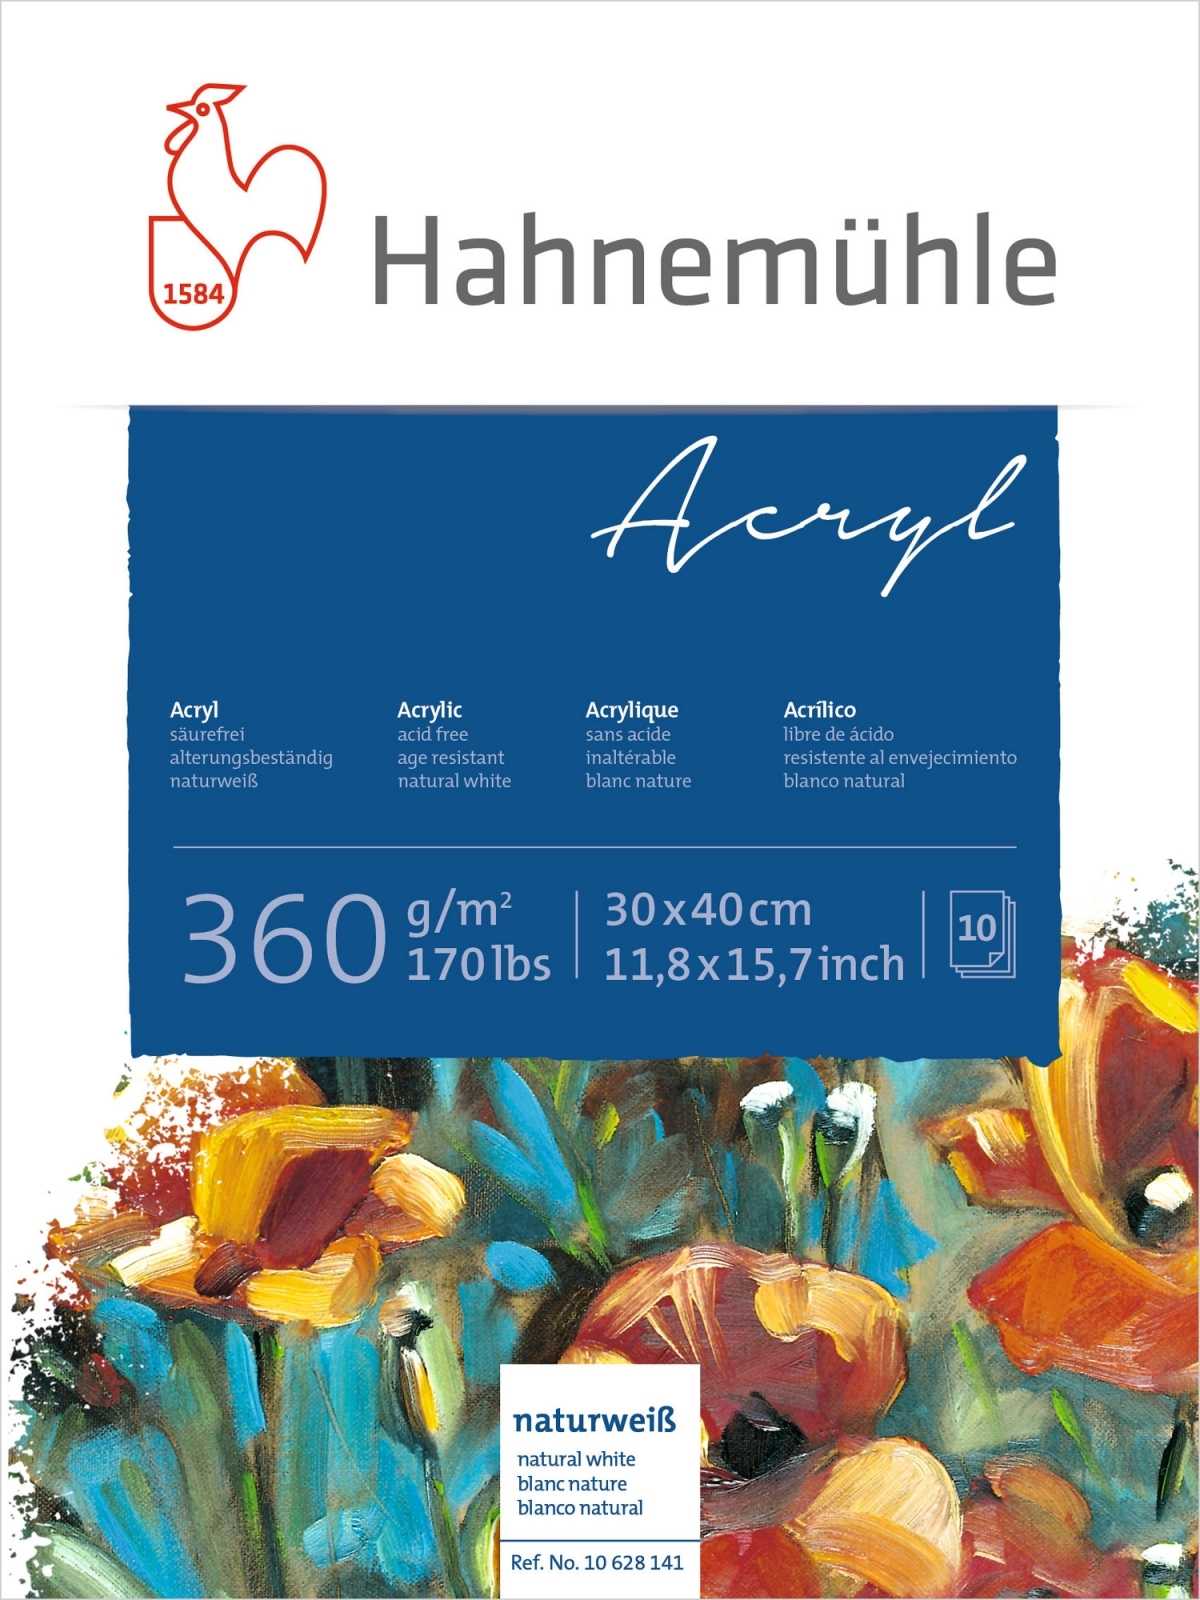 Hahnemuhle Acryl 360g 30x40cm 10fls